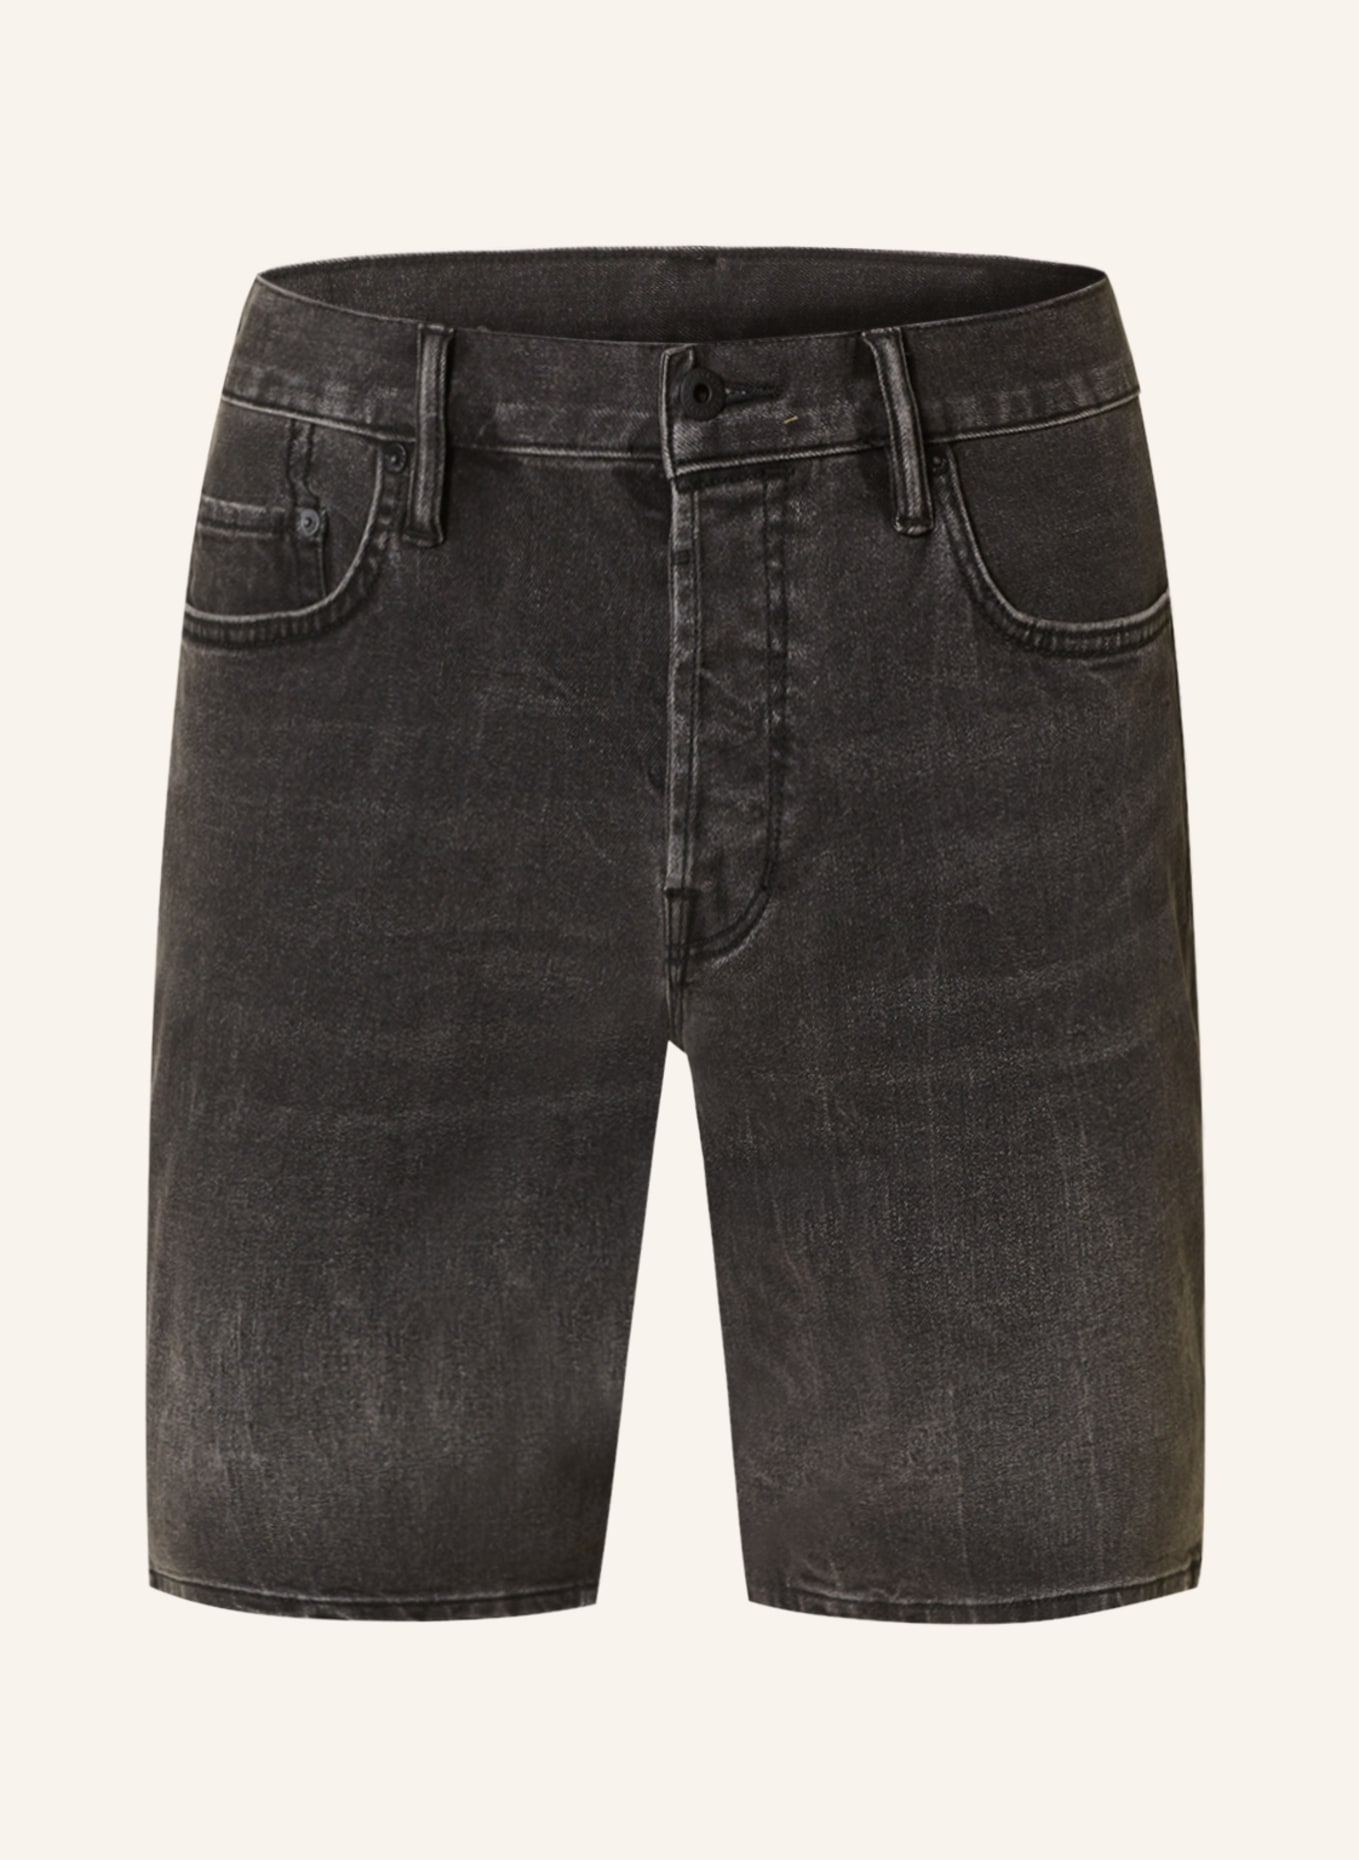 ALLSAINTS Jeanshorts SWITCH, Farbe: 162 Washed Black (Bild 1)